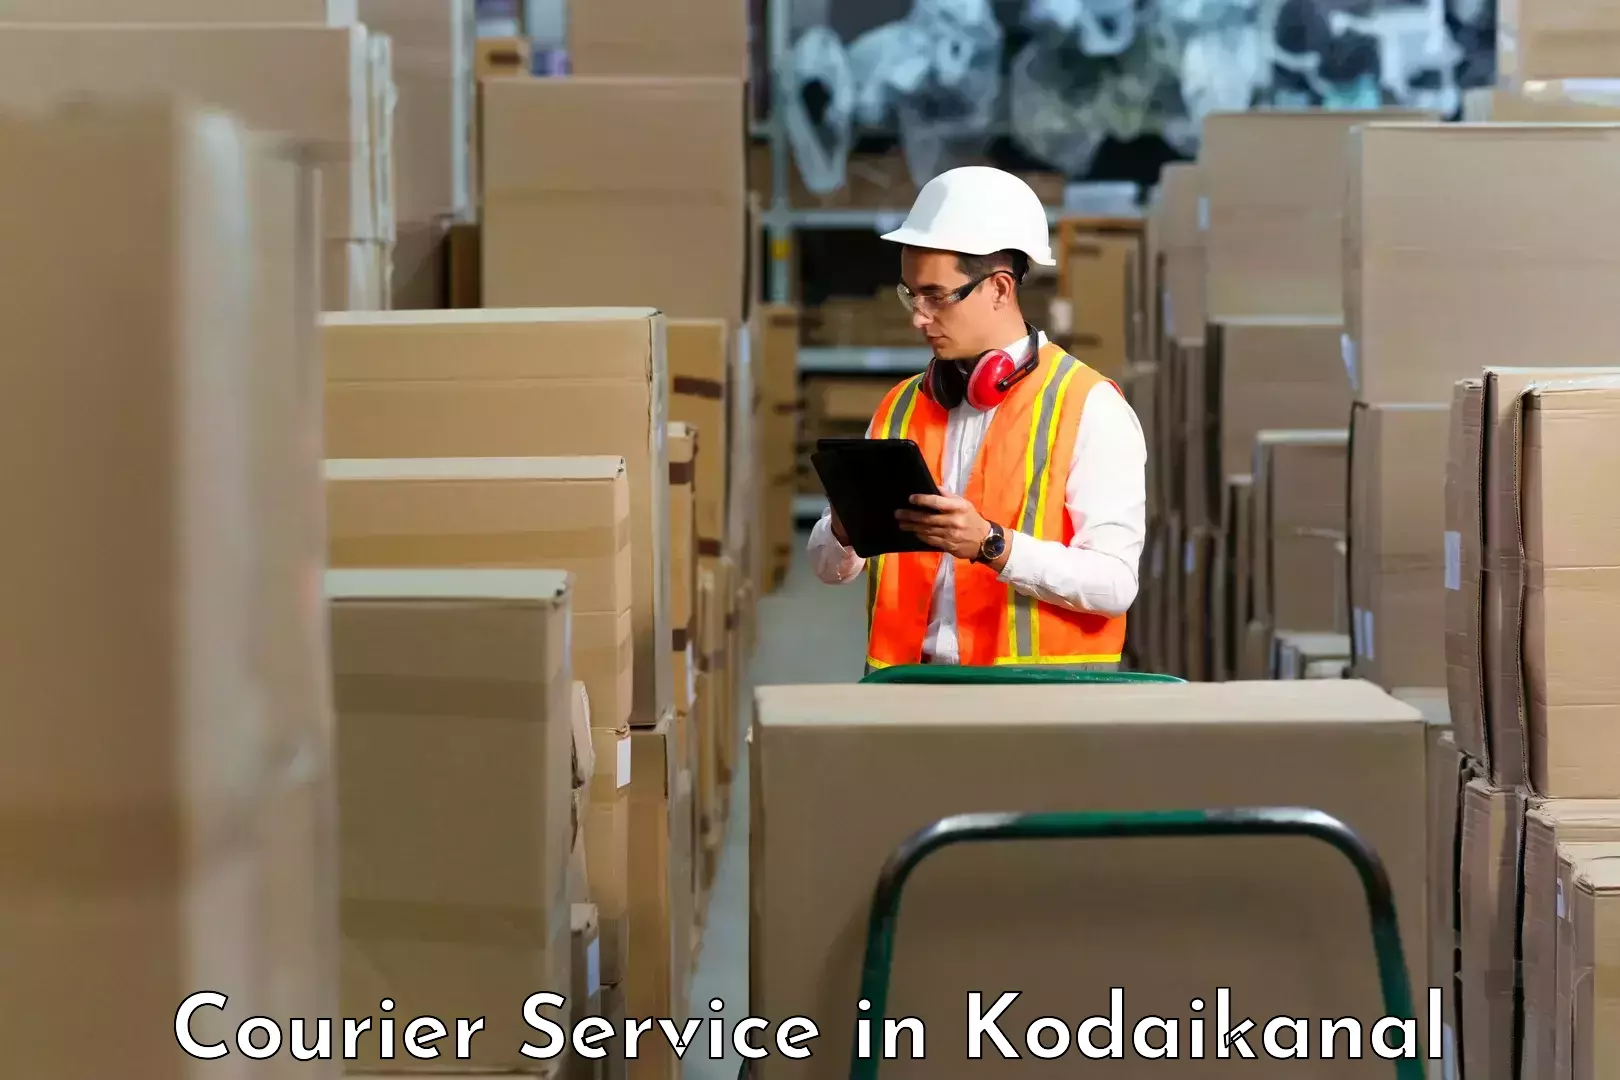 Full-service courier options in Kodaikanal